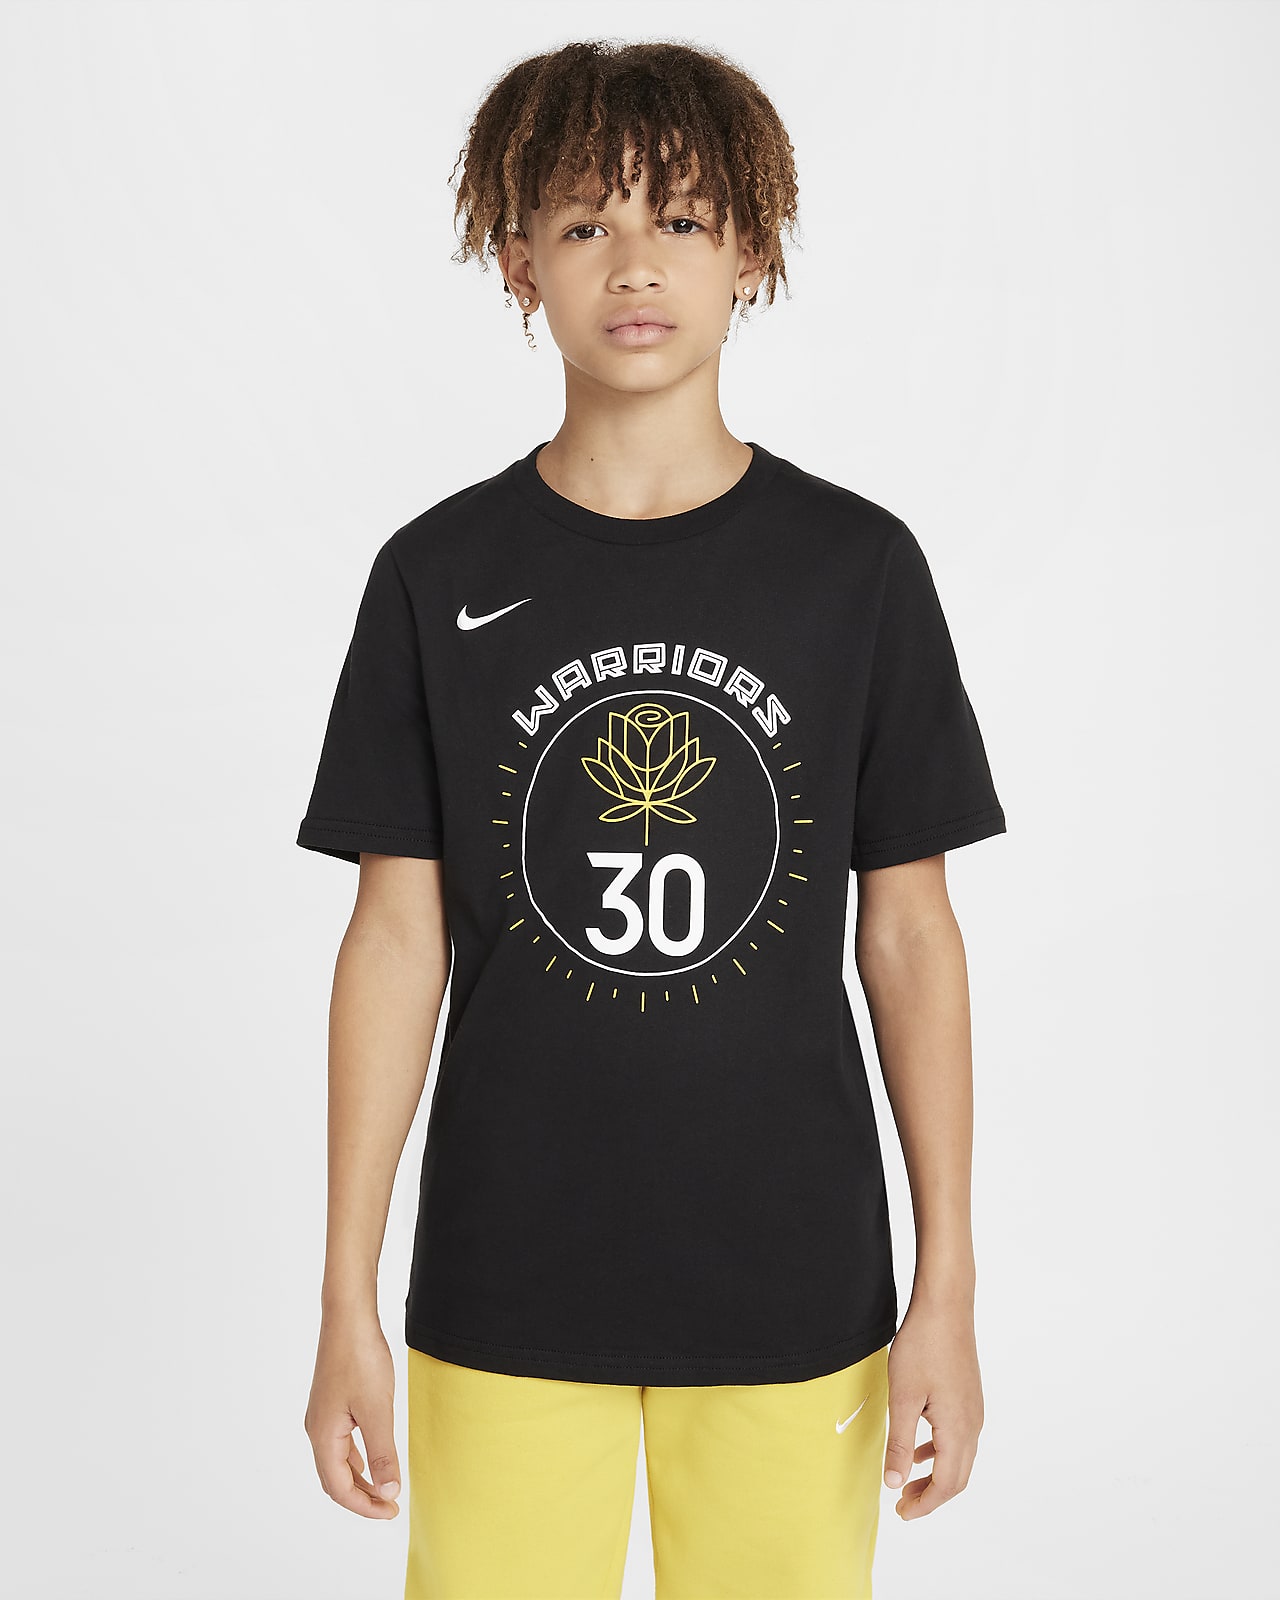 Tee-shirt Nike NBA Golden State Warriors City Edition pour ado